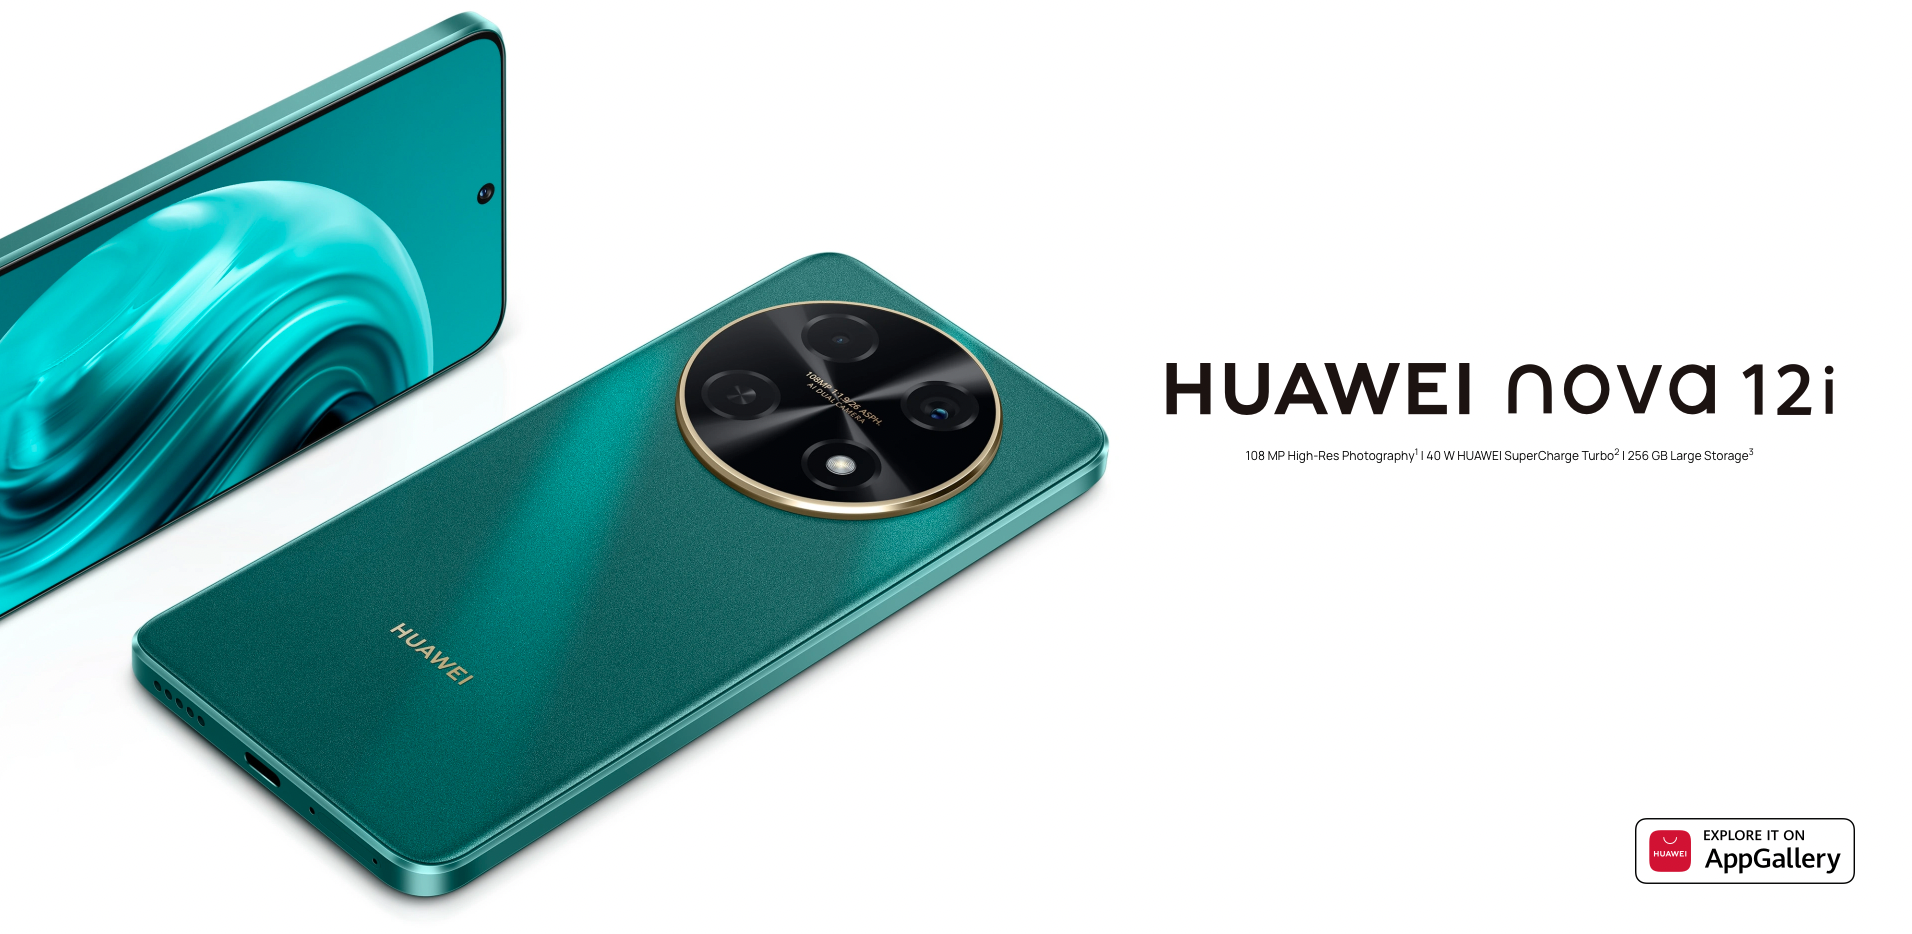 Huawei Nova 12i: display OLED a 90Hz, chip Snapdragon 680, fotocamera da 108 MP e batteria da 5000 mAh con ricarica a 40W